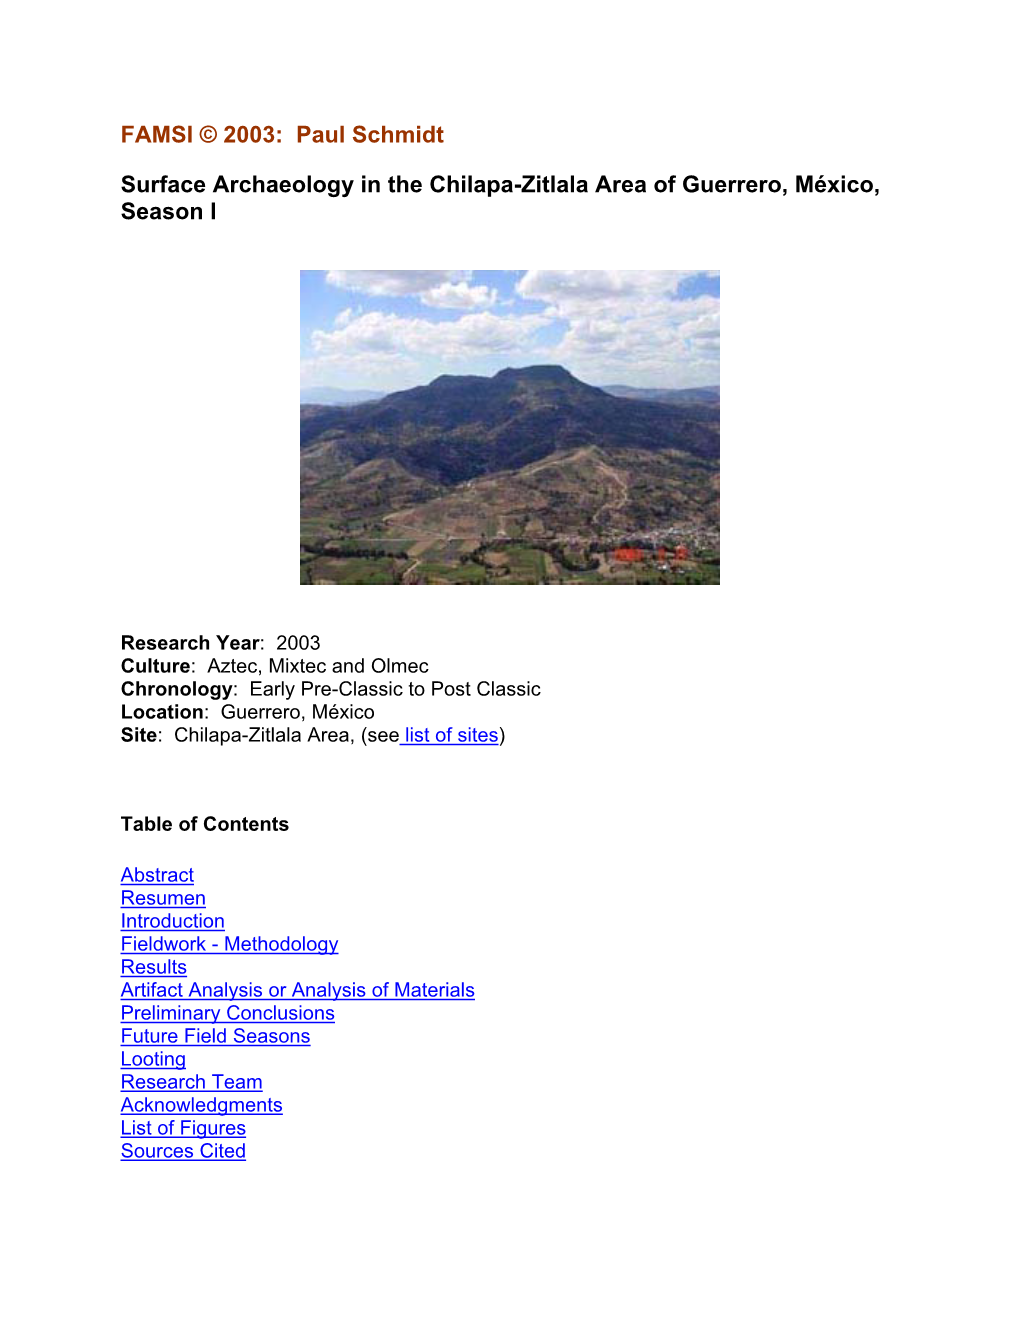 Surface Archaeology in the Chilapa-Zitlala Area of Guerrero, México, Season I